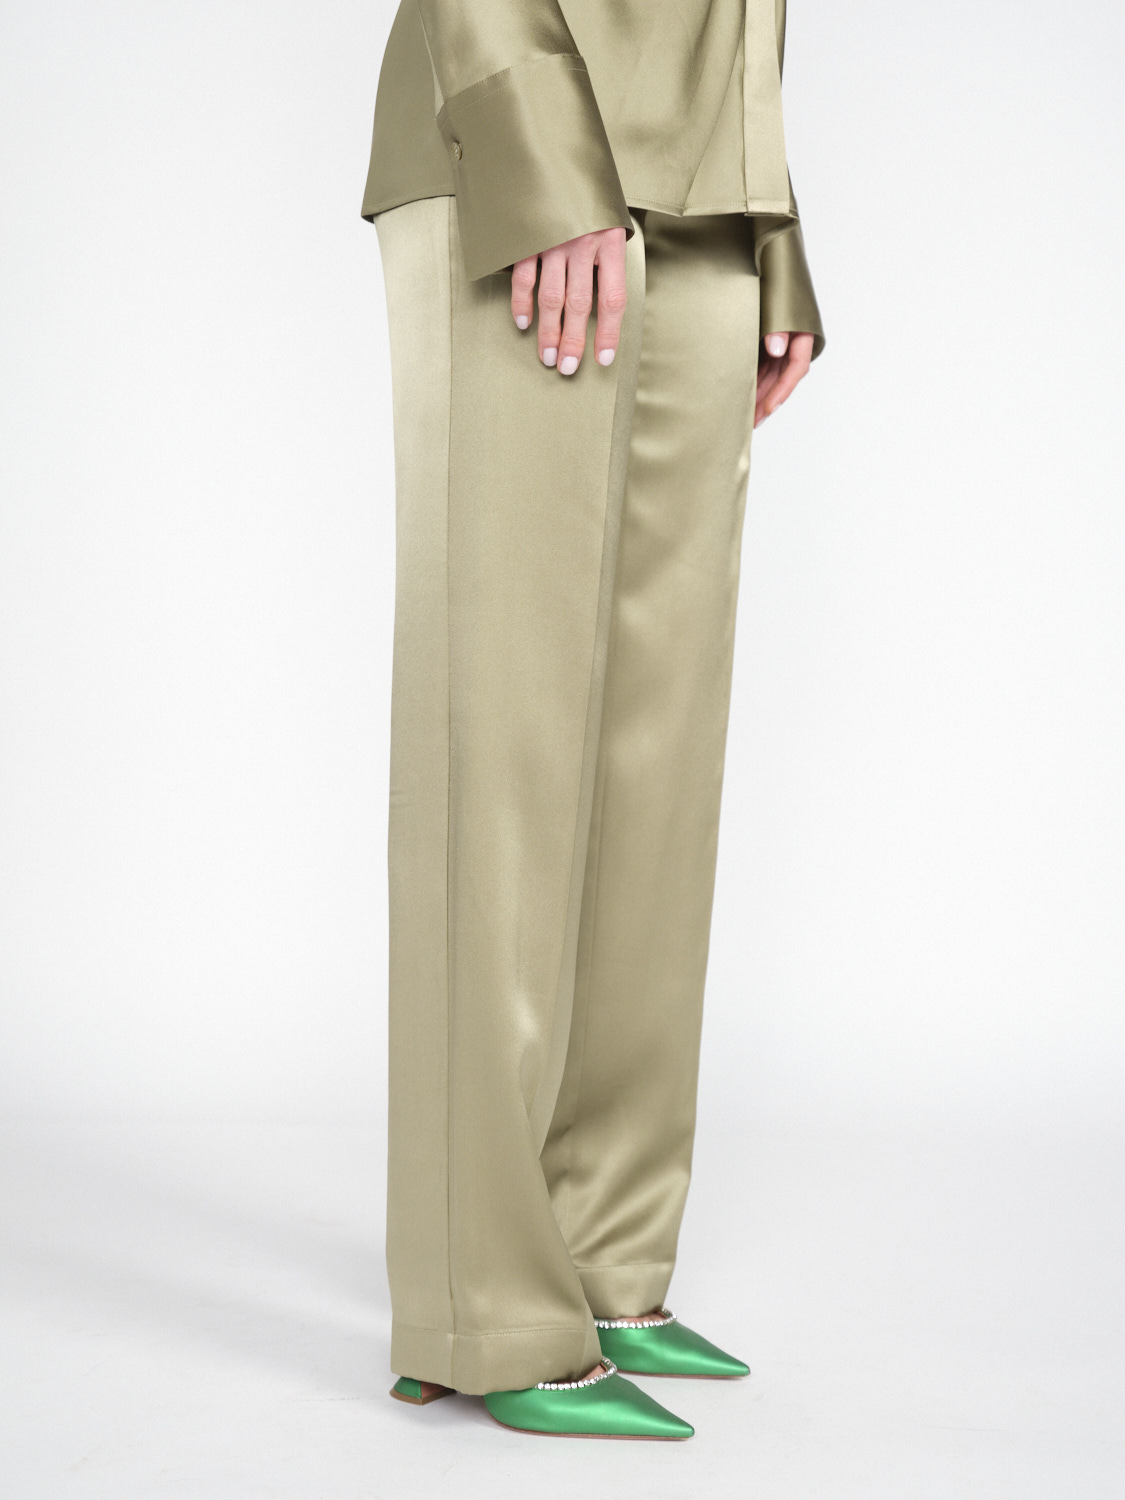 Joseph Silk Tova Trousers - Trousers in silk satin with creases  khaki 40